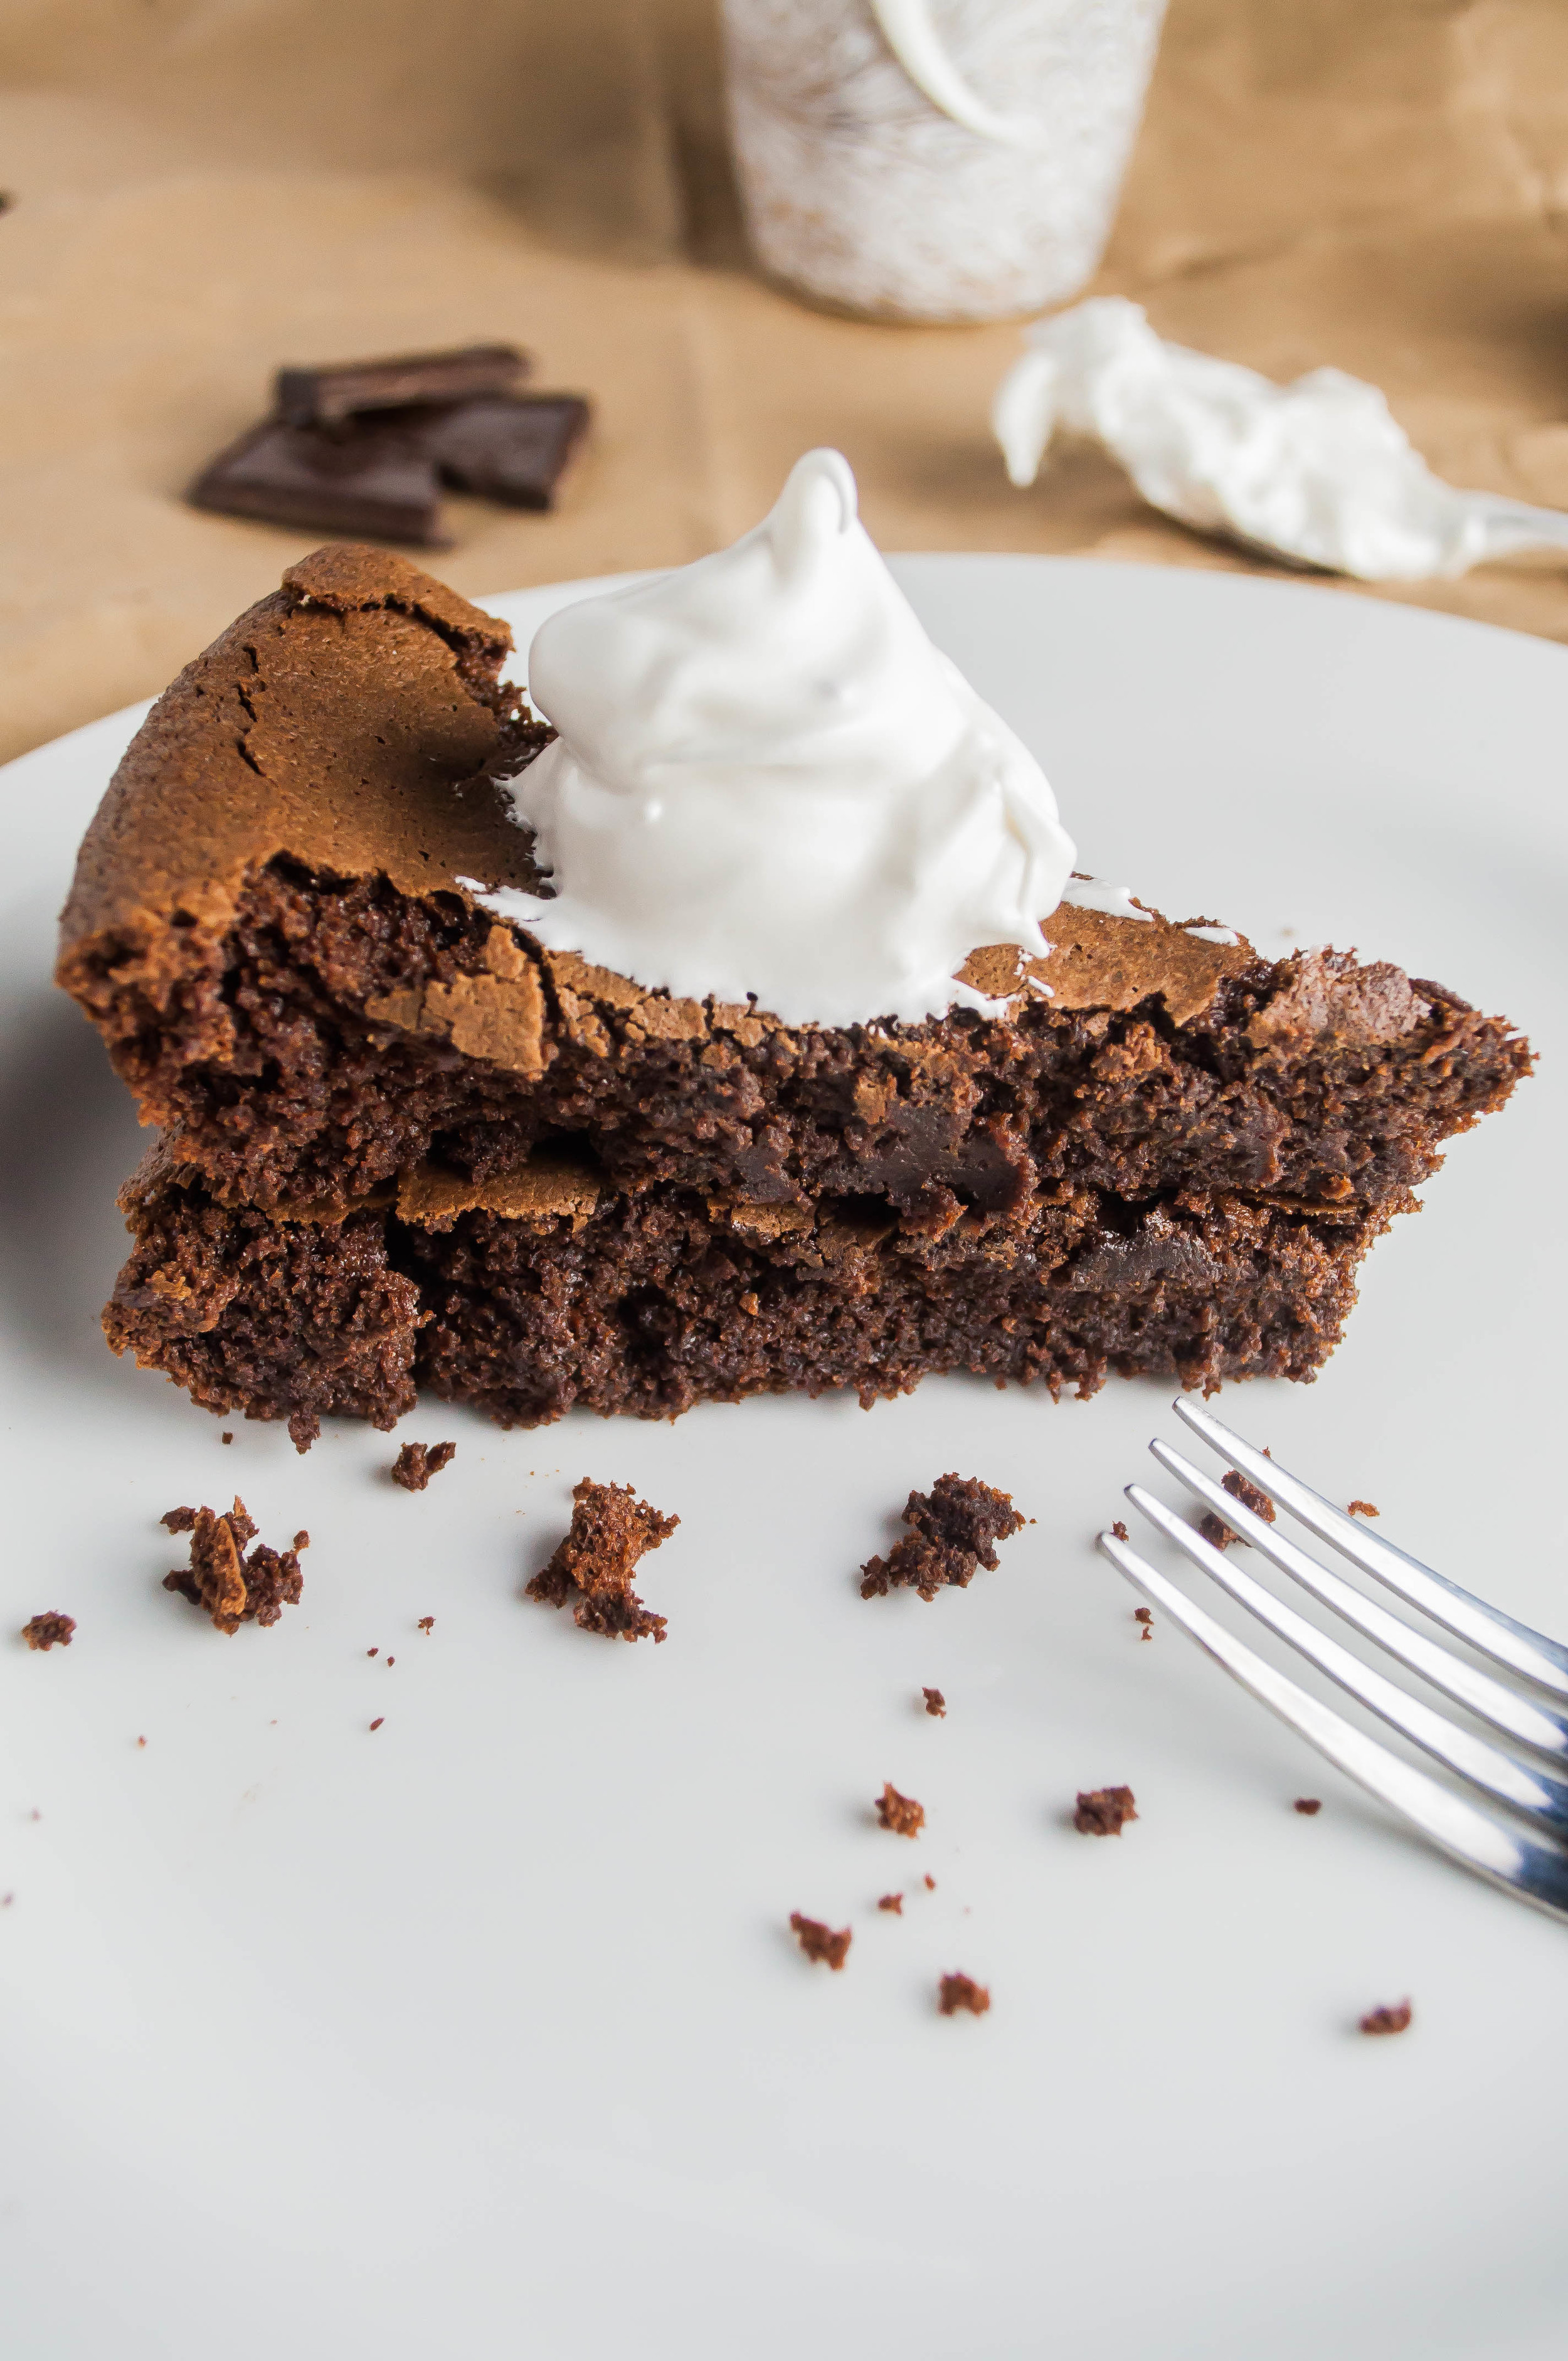 The Healthiest Chocolate Cake